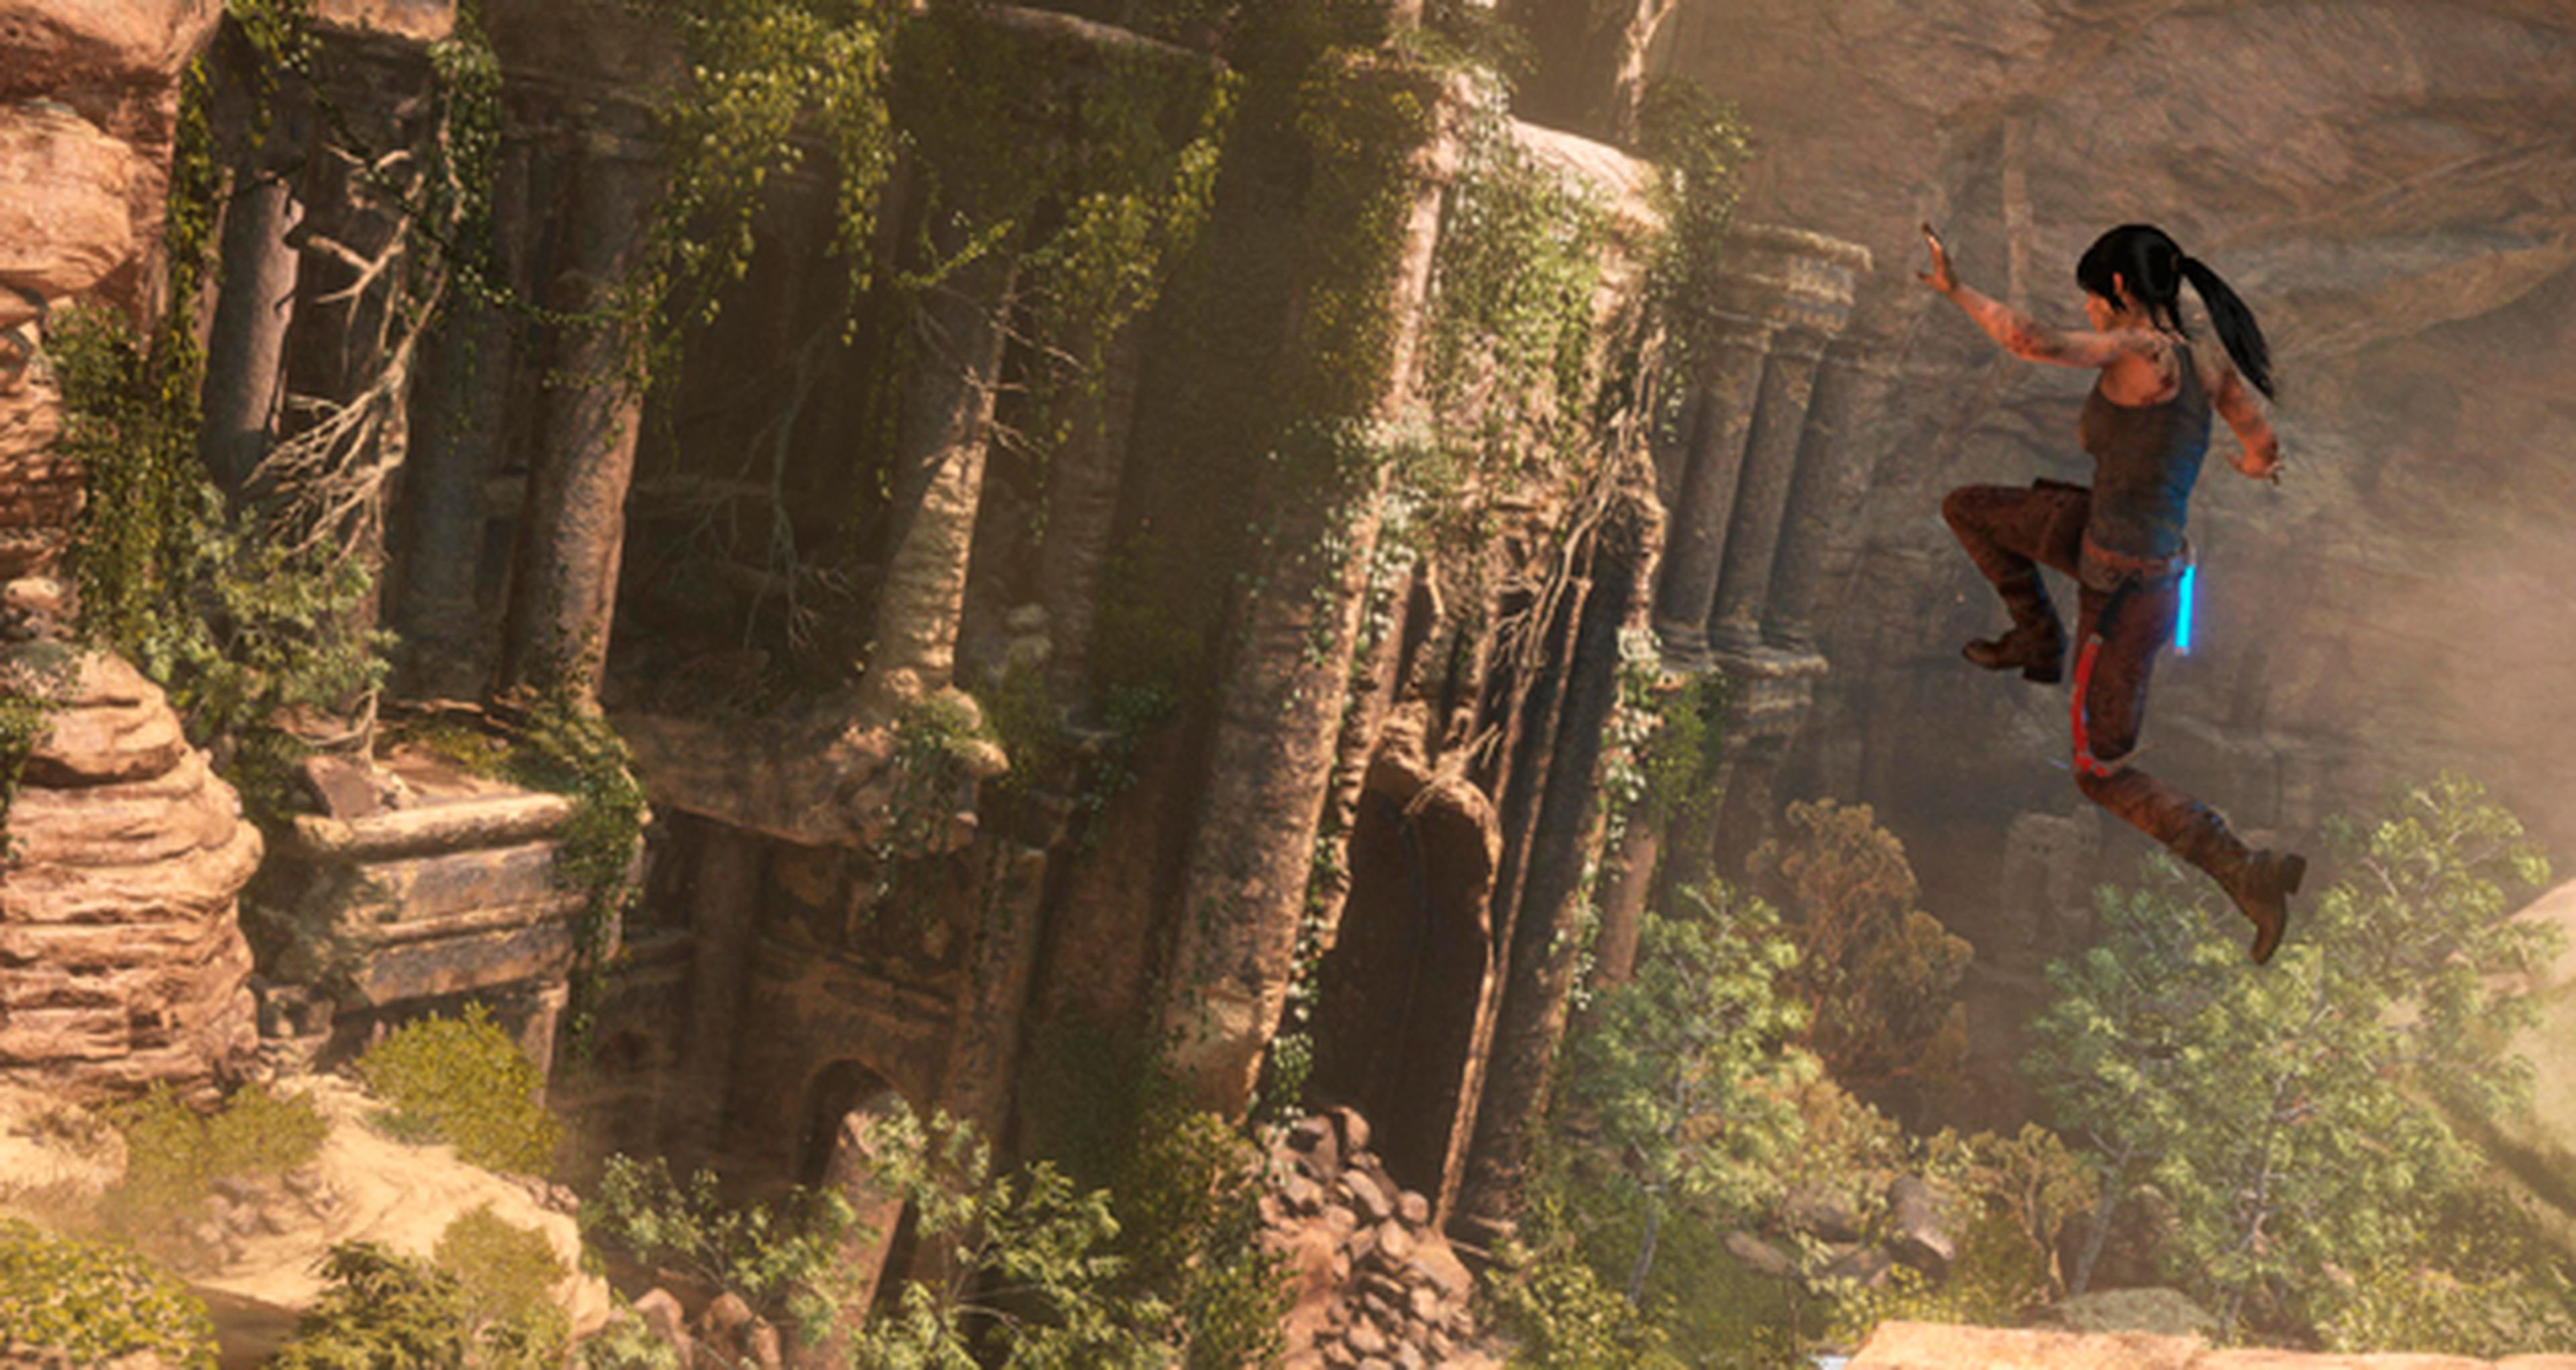 Rise of the Tomb Raider para PC, con regalo por reserva en GAME